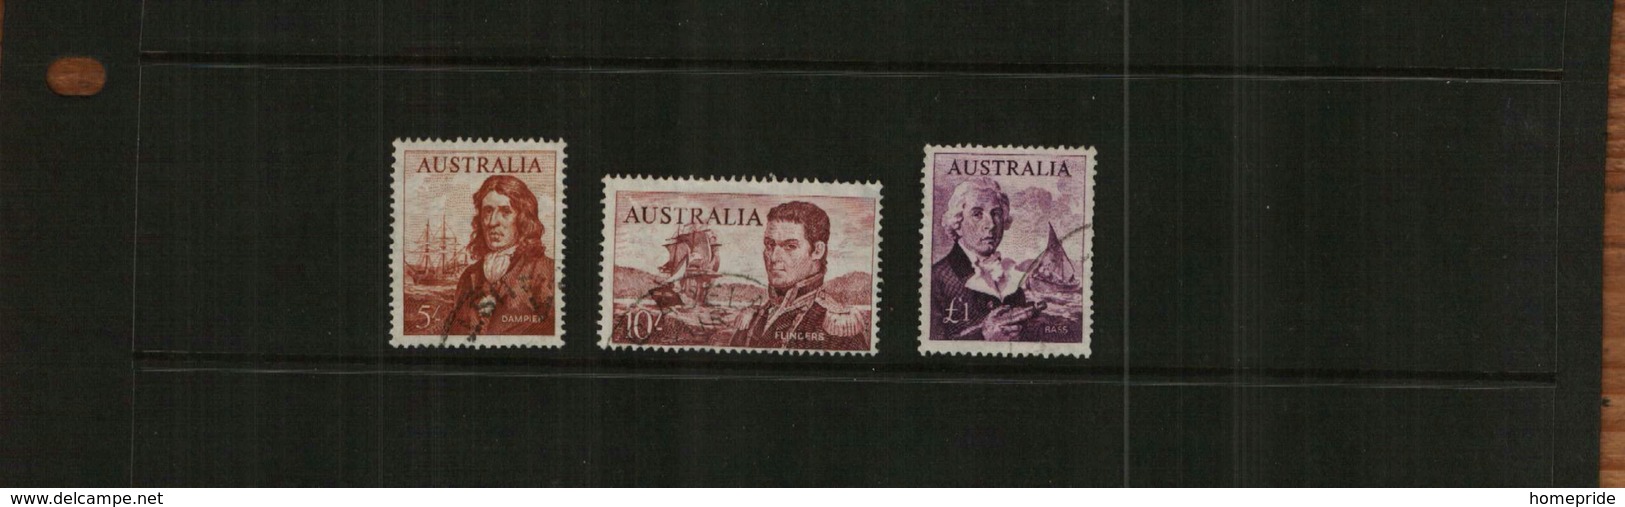 AUSTRALIA  - QE11 - 1963 - HIGH VALUES - 3 Stamps - USED - Gebruikt